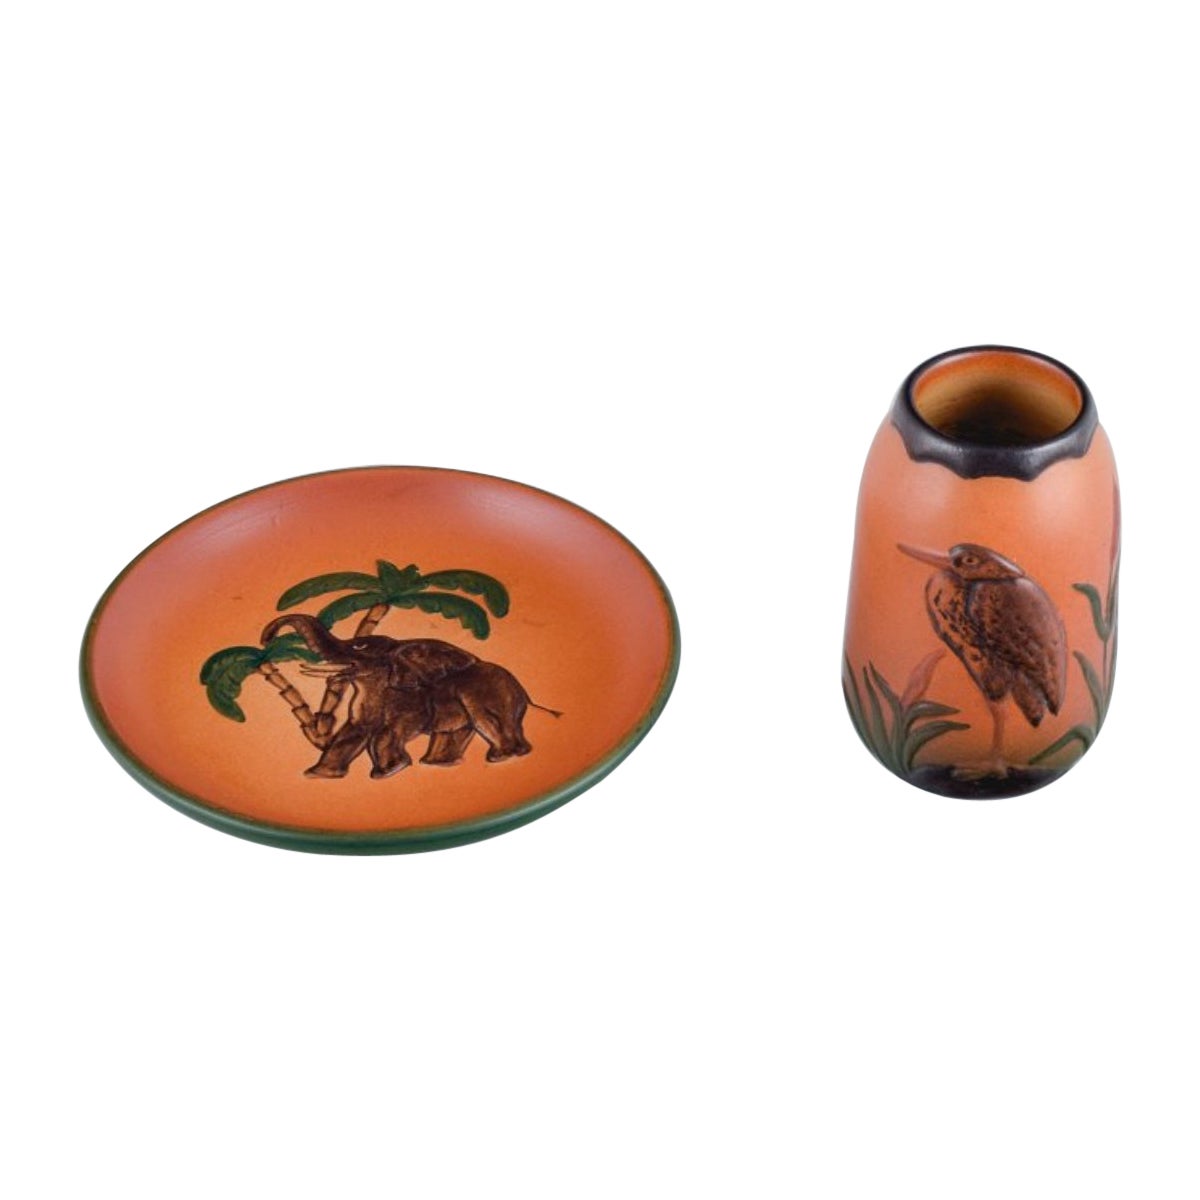 Ipsens Enke, Ceramic Vase and a Ceramic Dish, Malibu and Elephant Motif For Sale